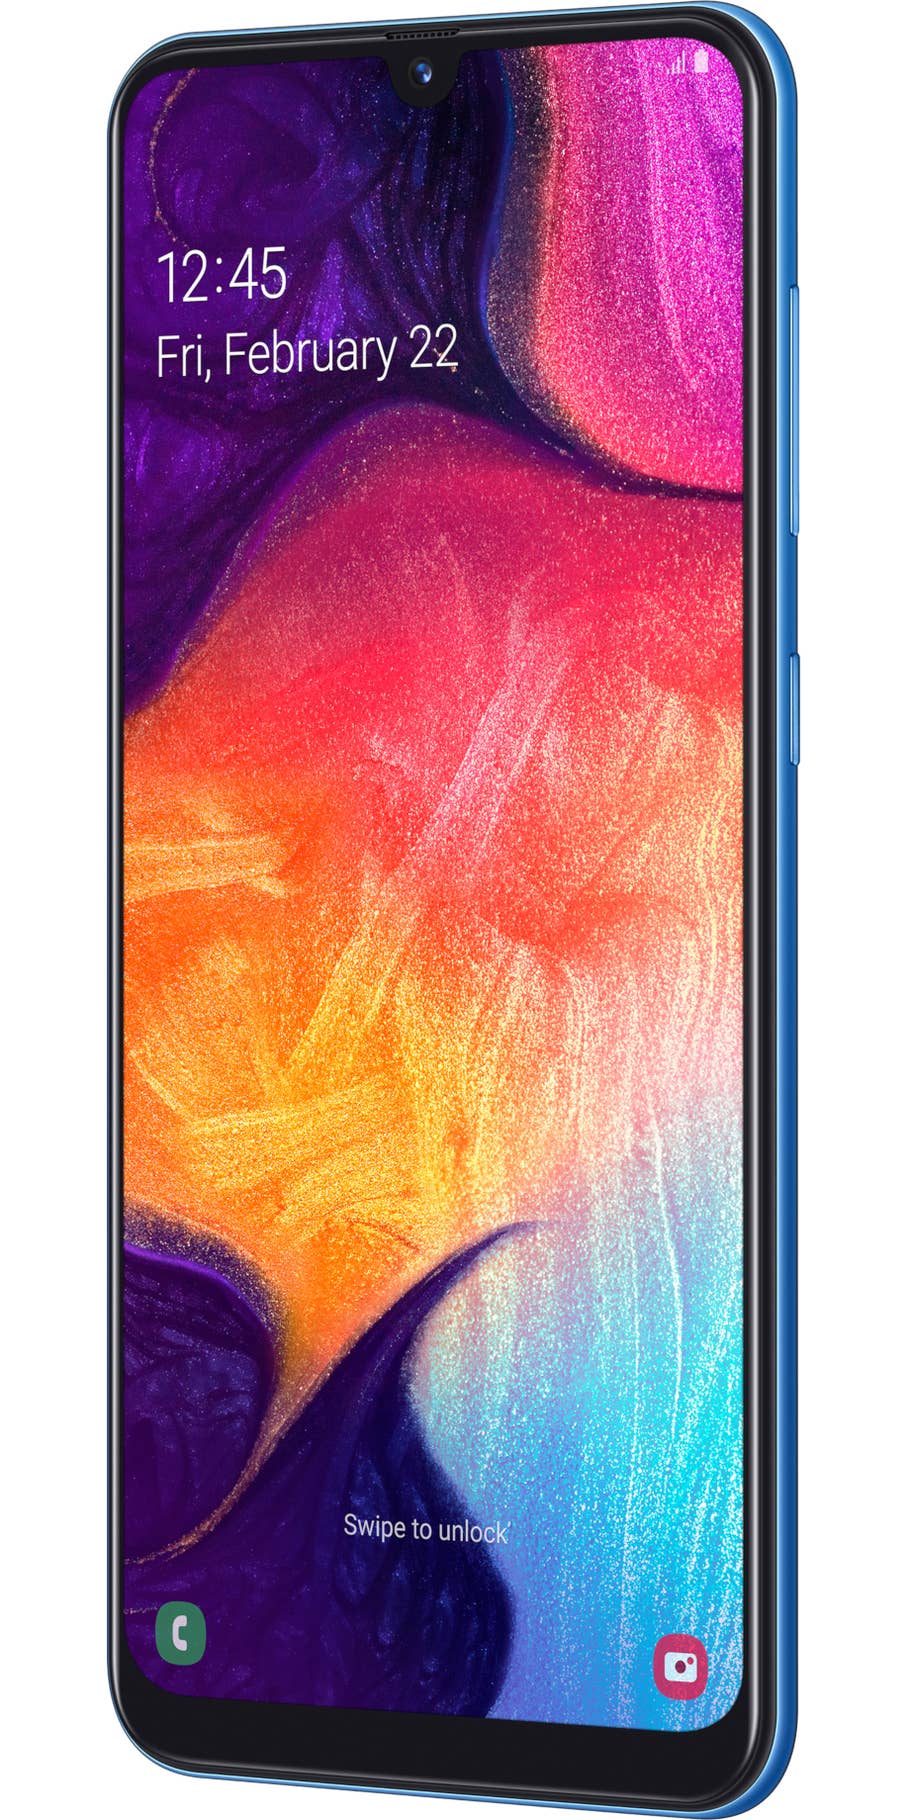 Das Smartphone Samsung Galaxy A50